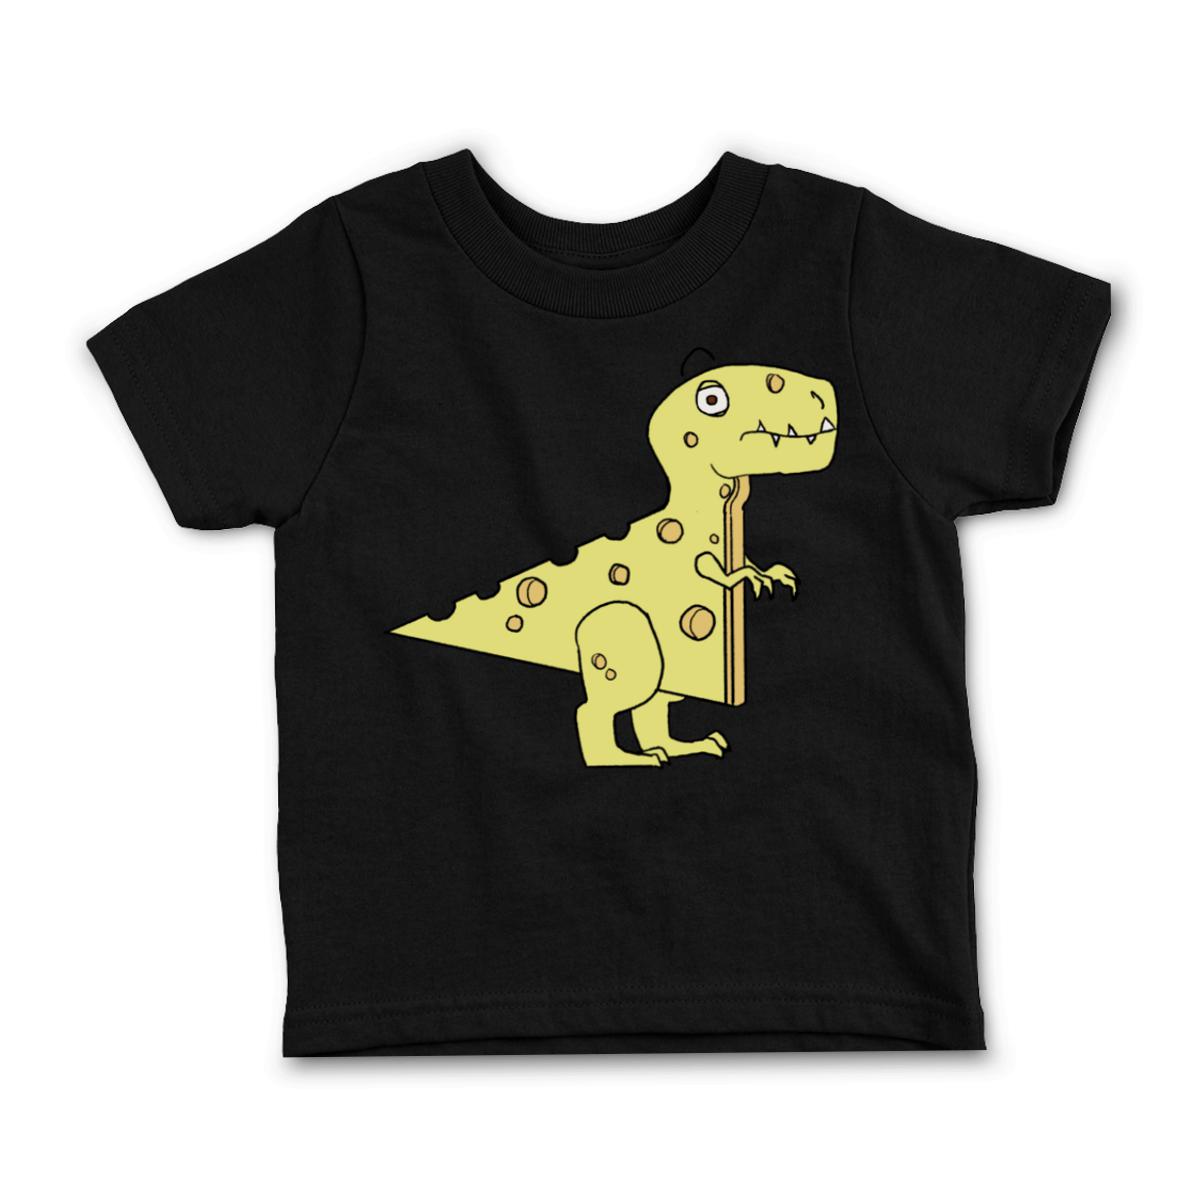 Cheeseosaurus Rex Toddler Tee 2T black